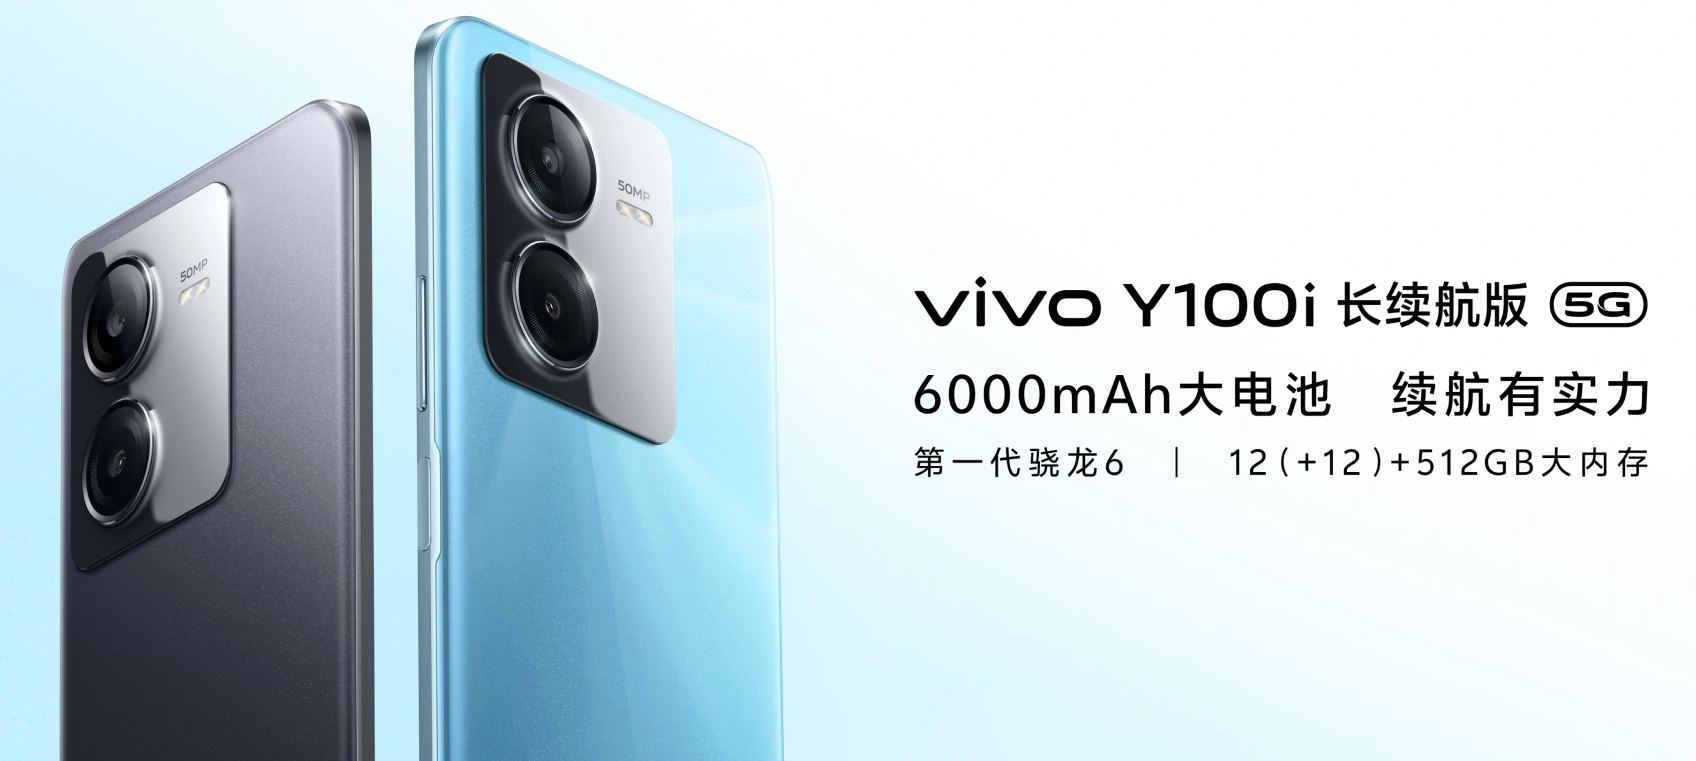 Представлен Vivo Y100i Power с аккумулятором 6000 мАч